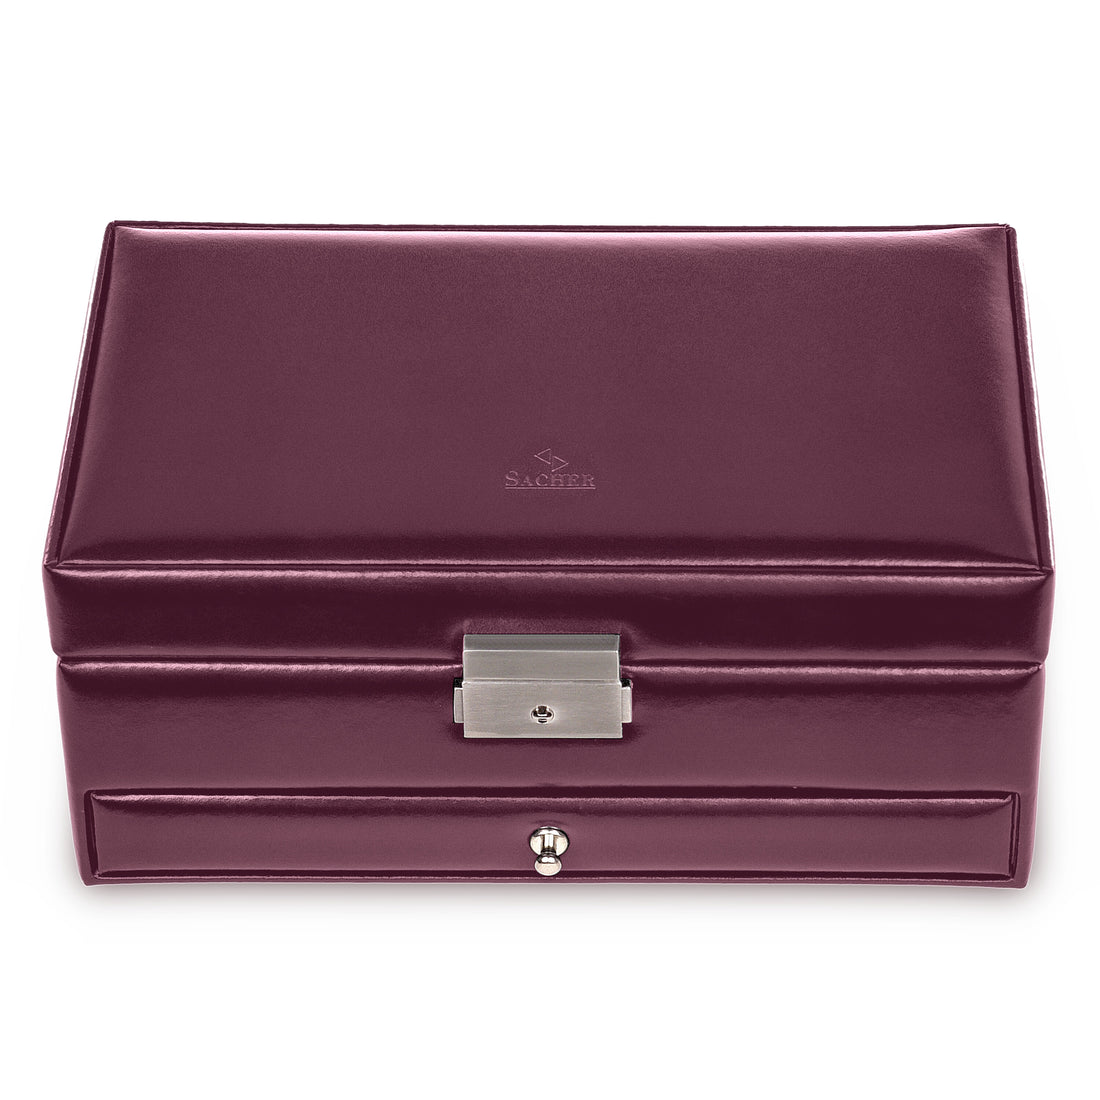 jewellery box Hanna new classic / bordeaux (leather)